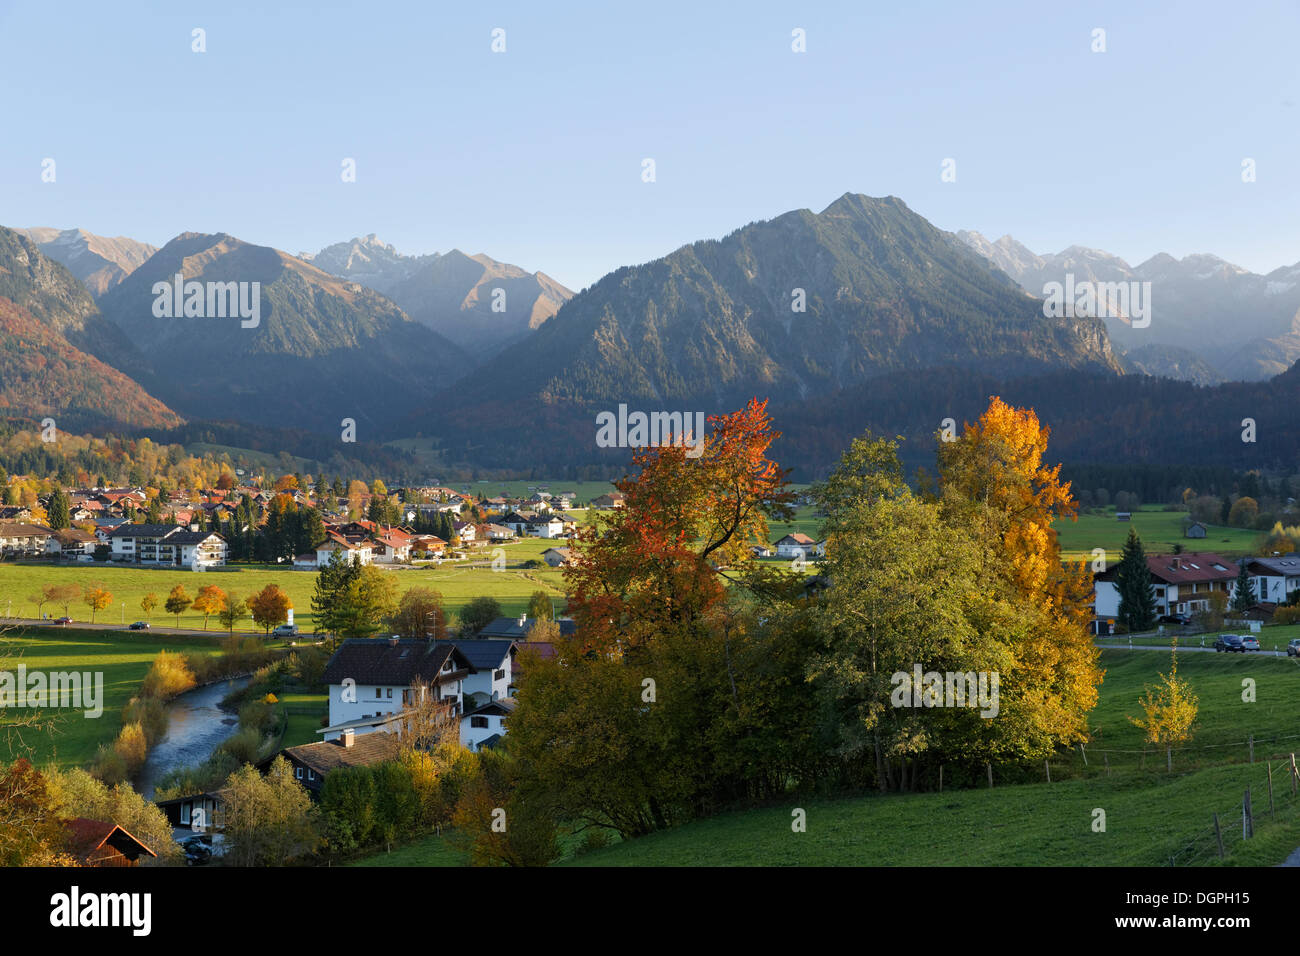 Oberstdorf with Himmelschrofen mountain, Illertal valley, Allgaeu Alps, Oberstdorf, Oberallgäu, Allgäu, Swabia, Bavaria Stock Photo